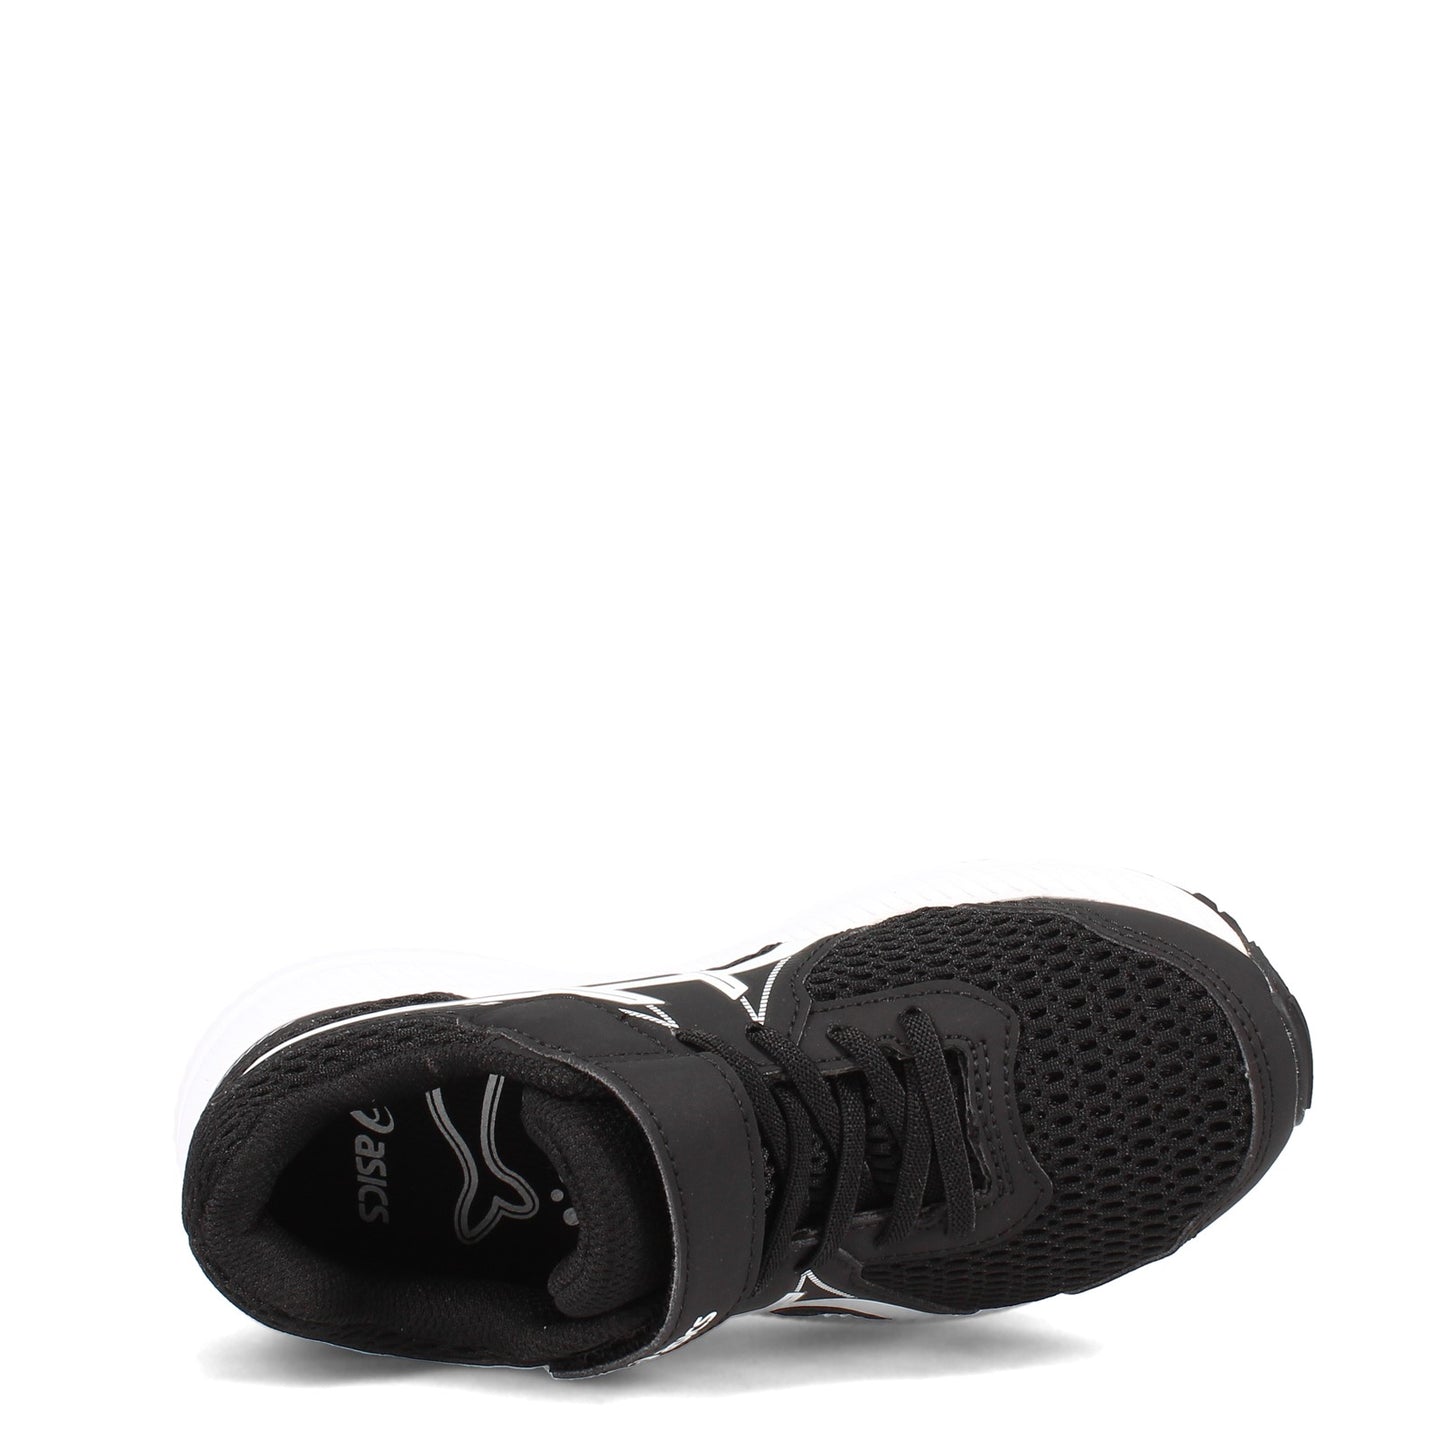 Peltz Shoes  Boy's ASICS Contend 7 PS Running Shoe - Little Kid BLACK / WHITE 1014A194.002